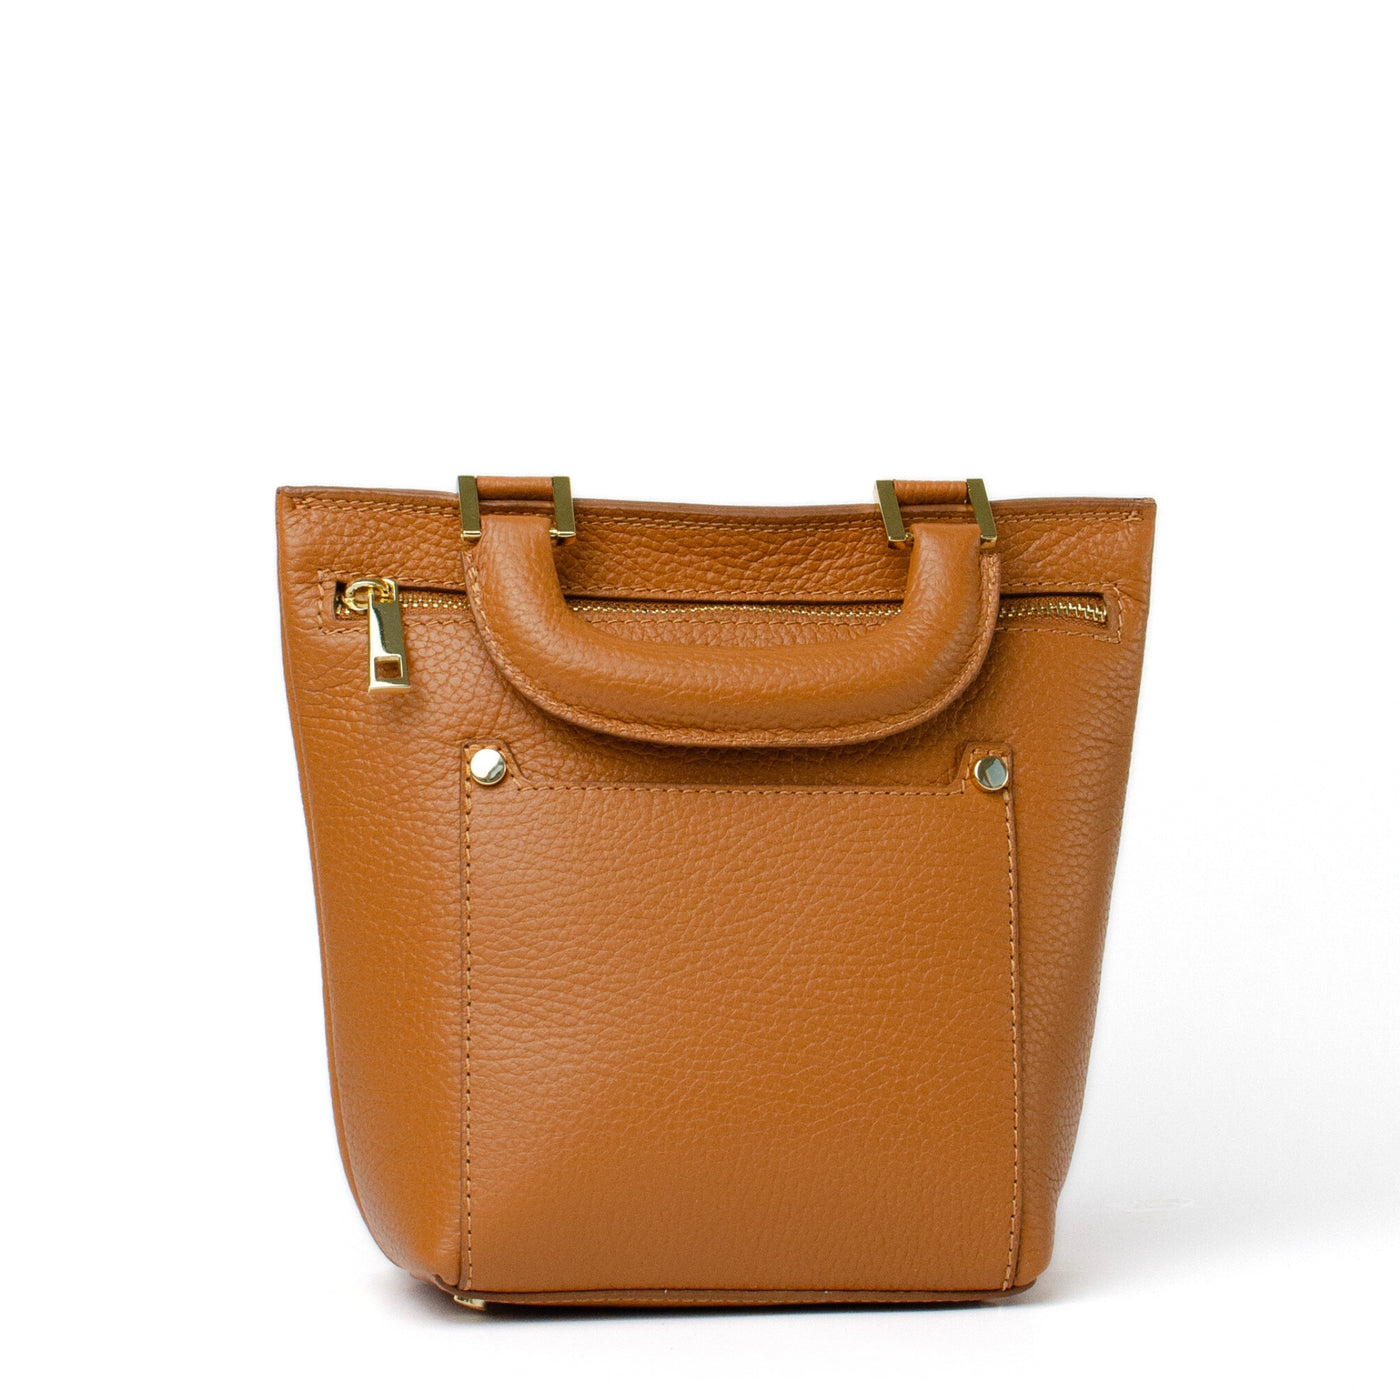 Leather bag "Carpi", Brown